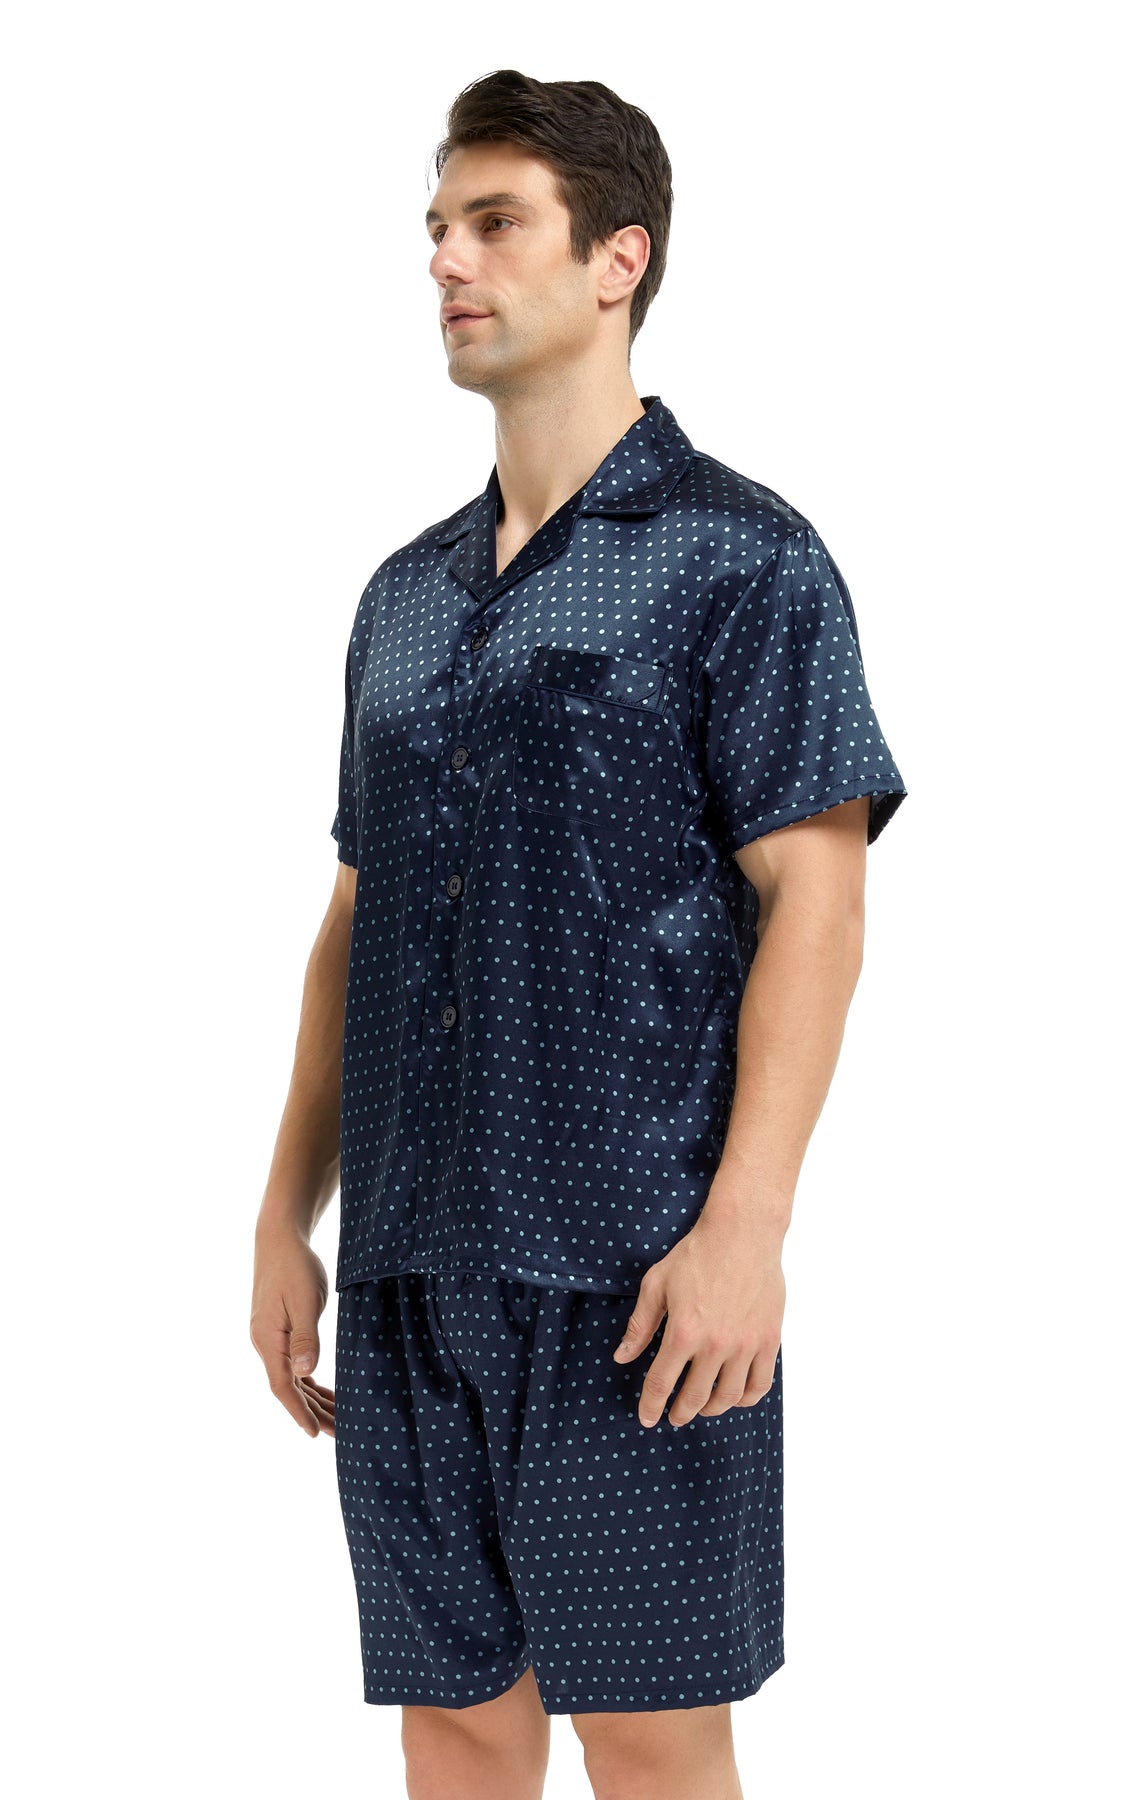 Men's Silk Satin Pajama Set Short Sleeve-Navy Blue with Polka Dots ...